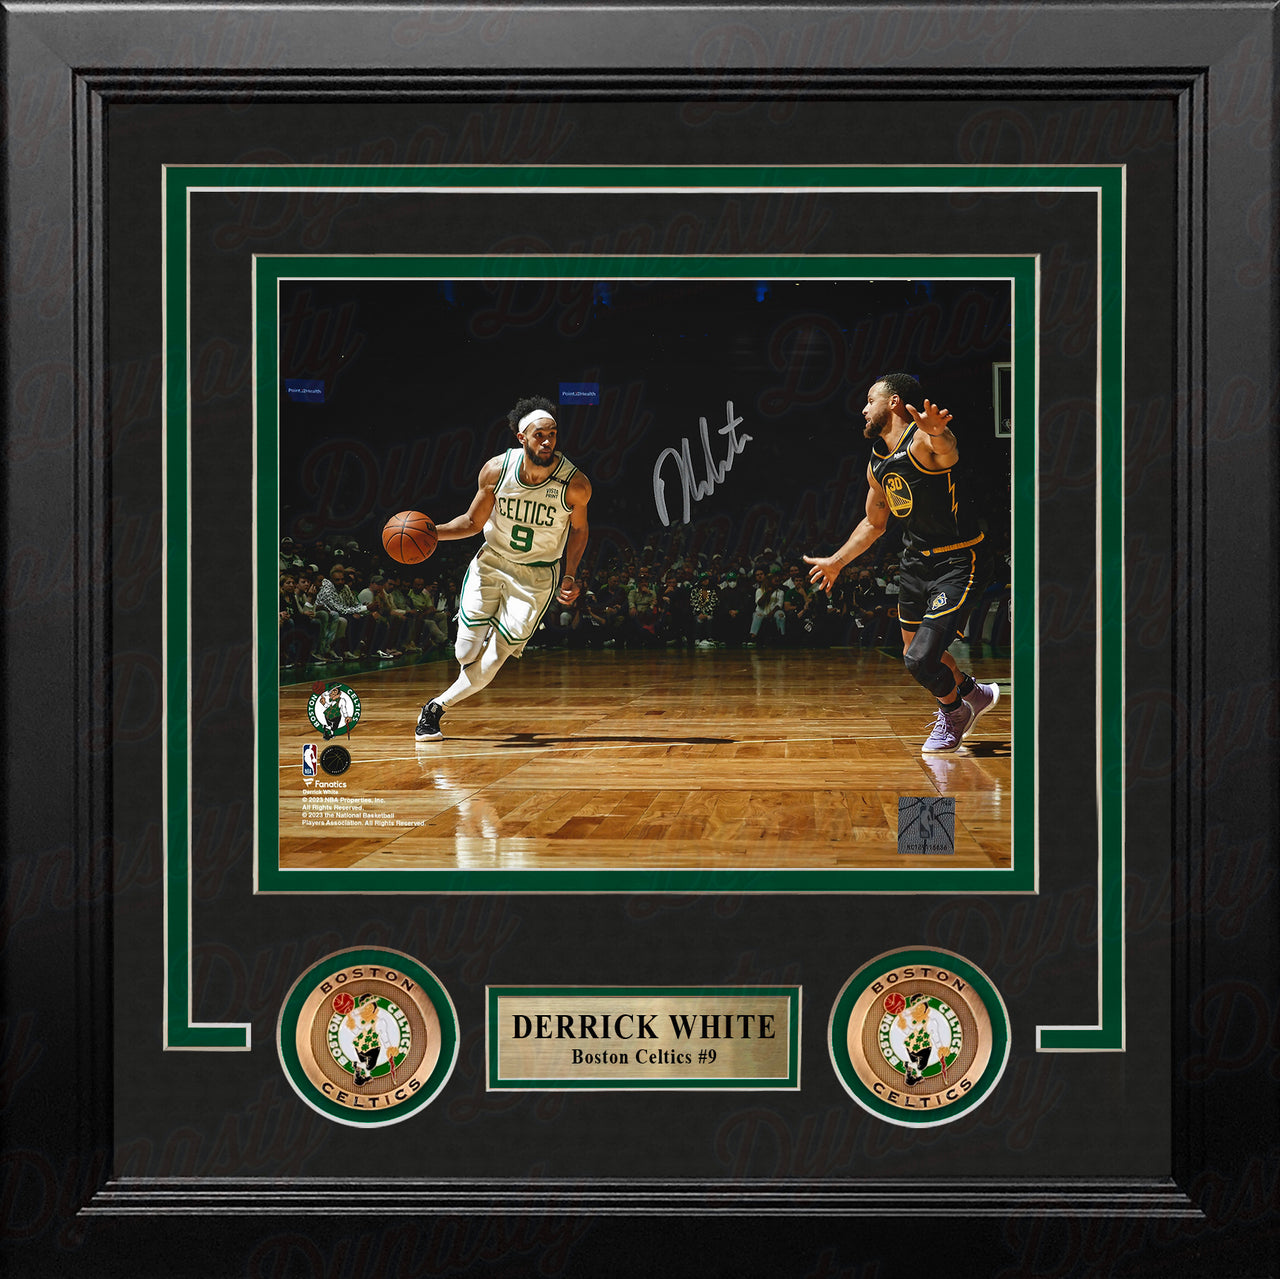 Derrick White v. Steph Curry Boston Celtics Autographed Framed Basketball Photo - Dynasty Sports & Framing 